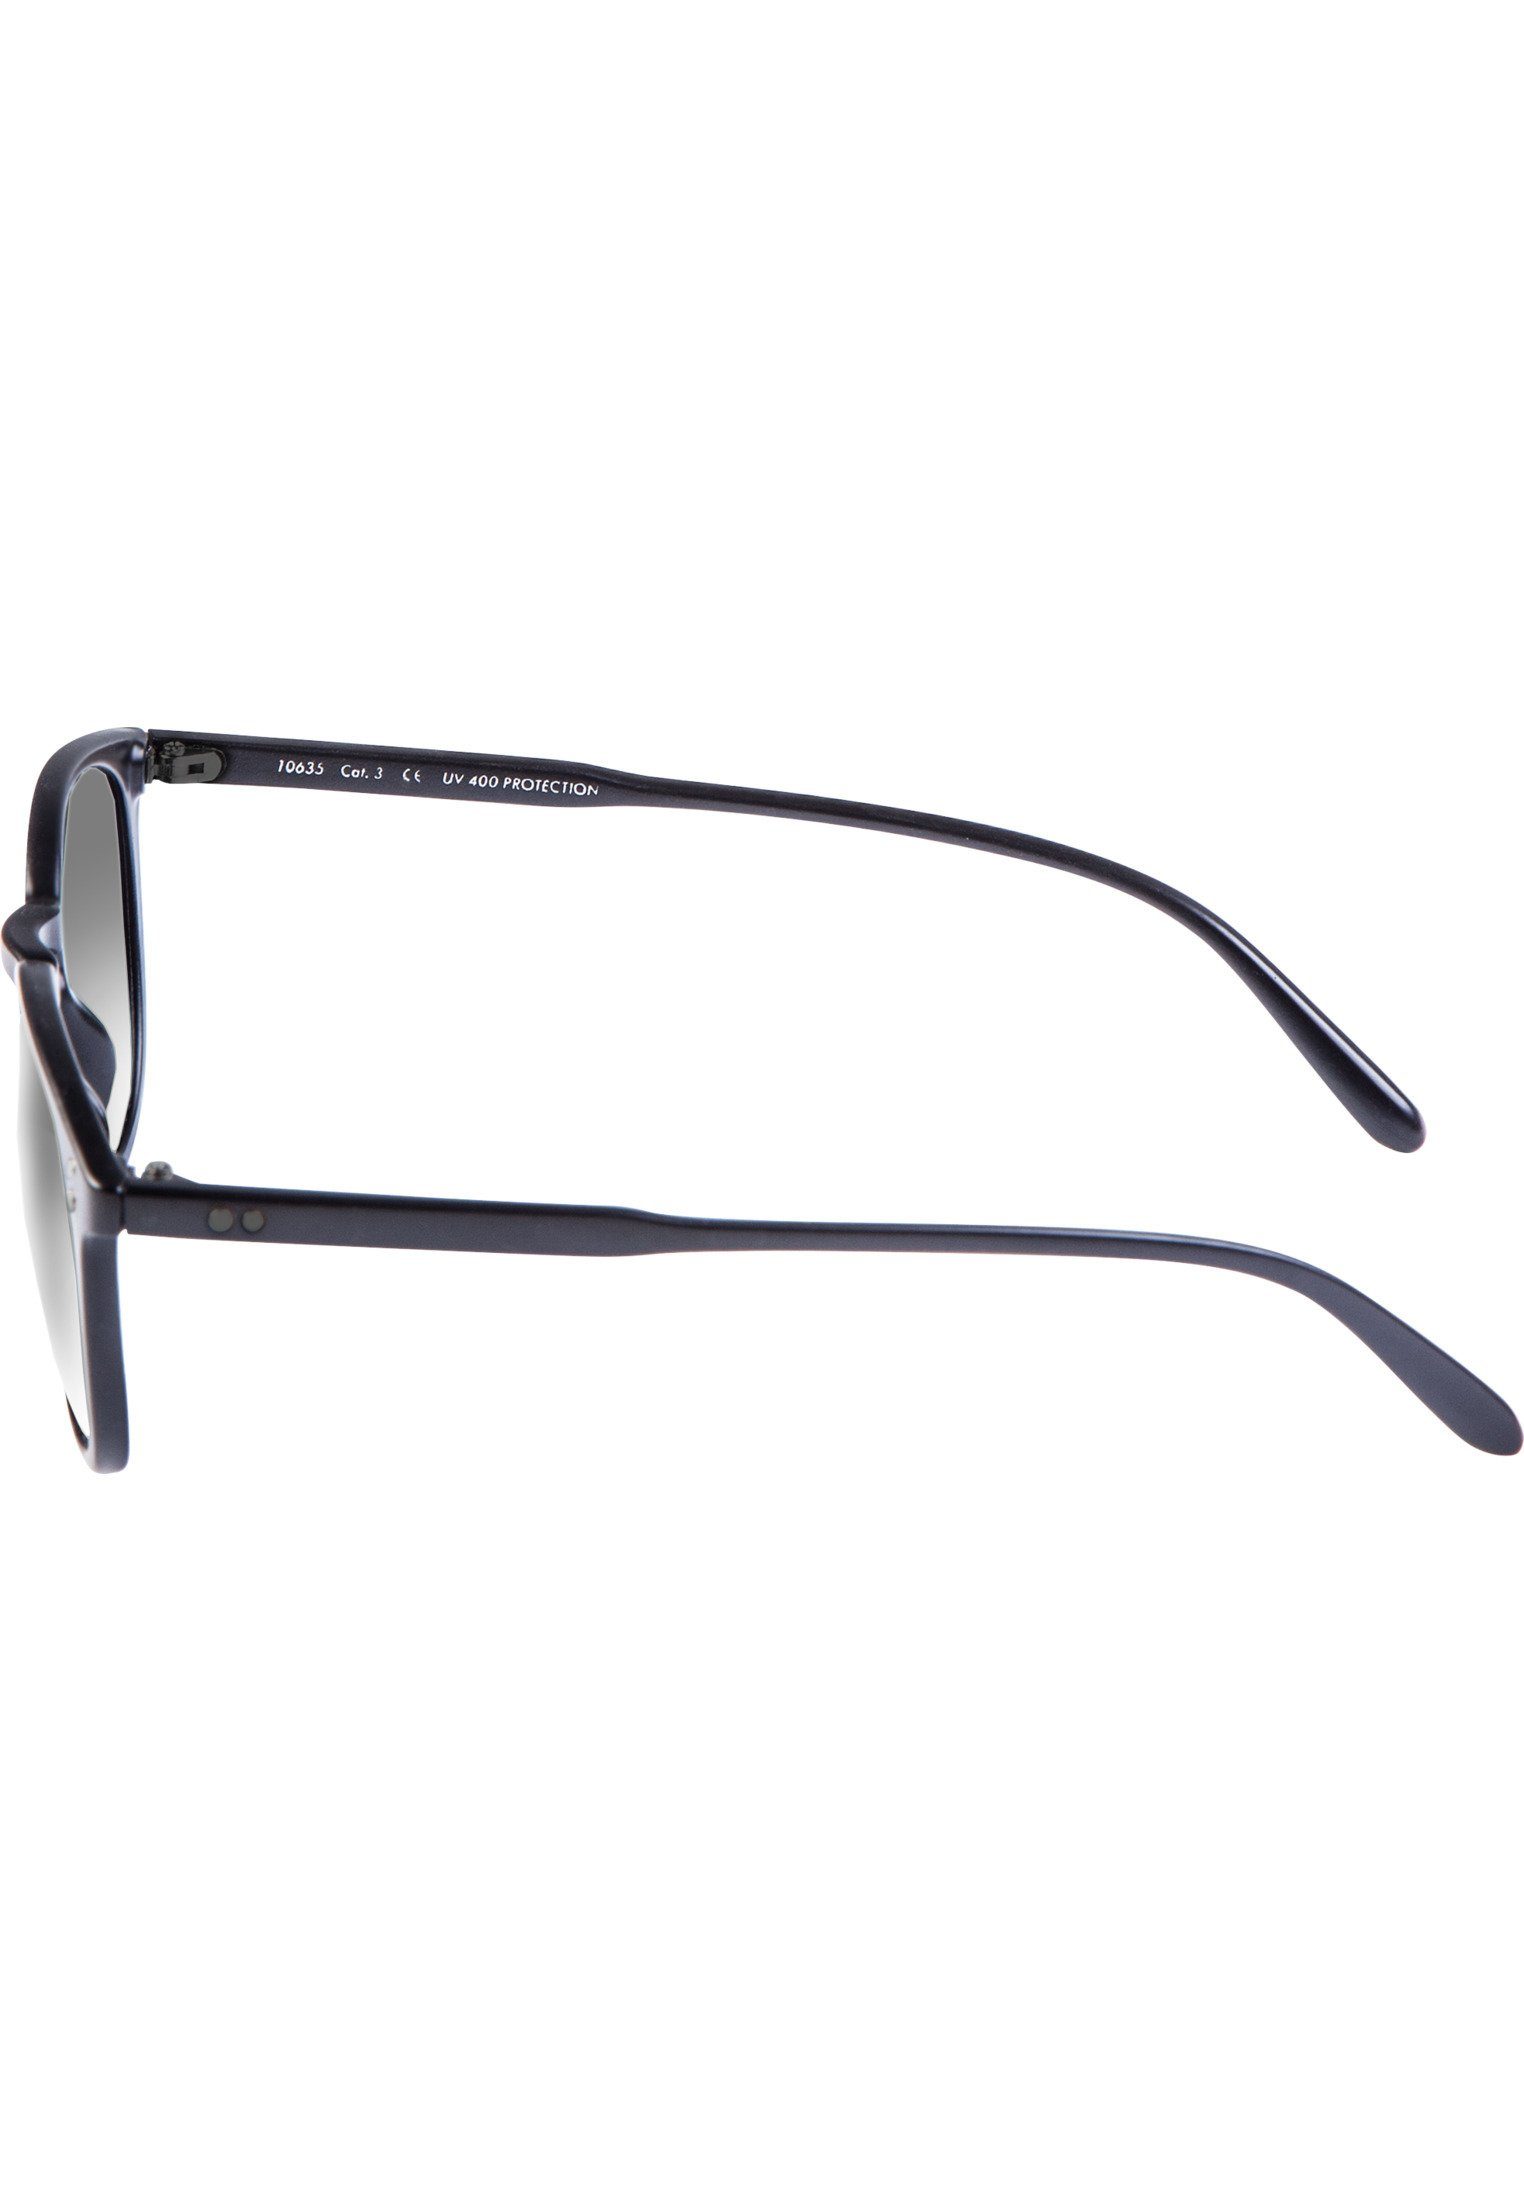 MSTRDS Sonnenbrille Accessoires Sunglasses Arthur Youth blk/grn